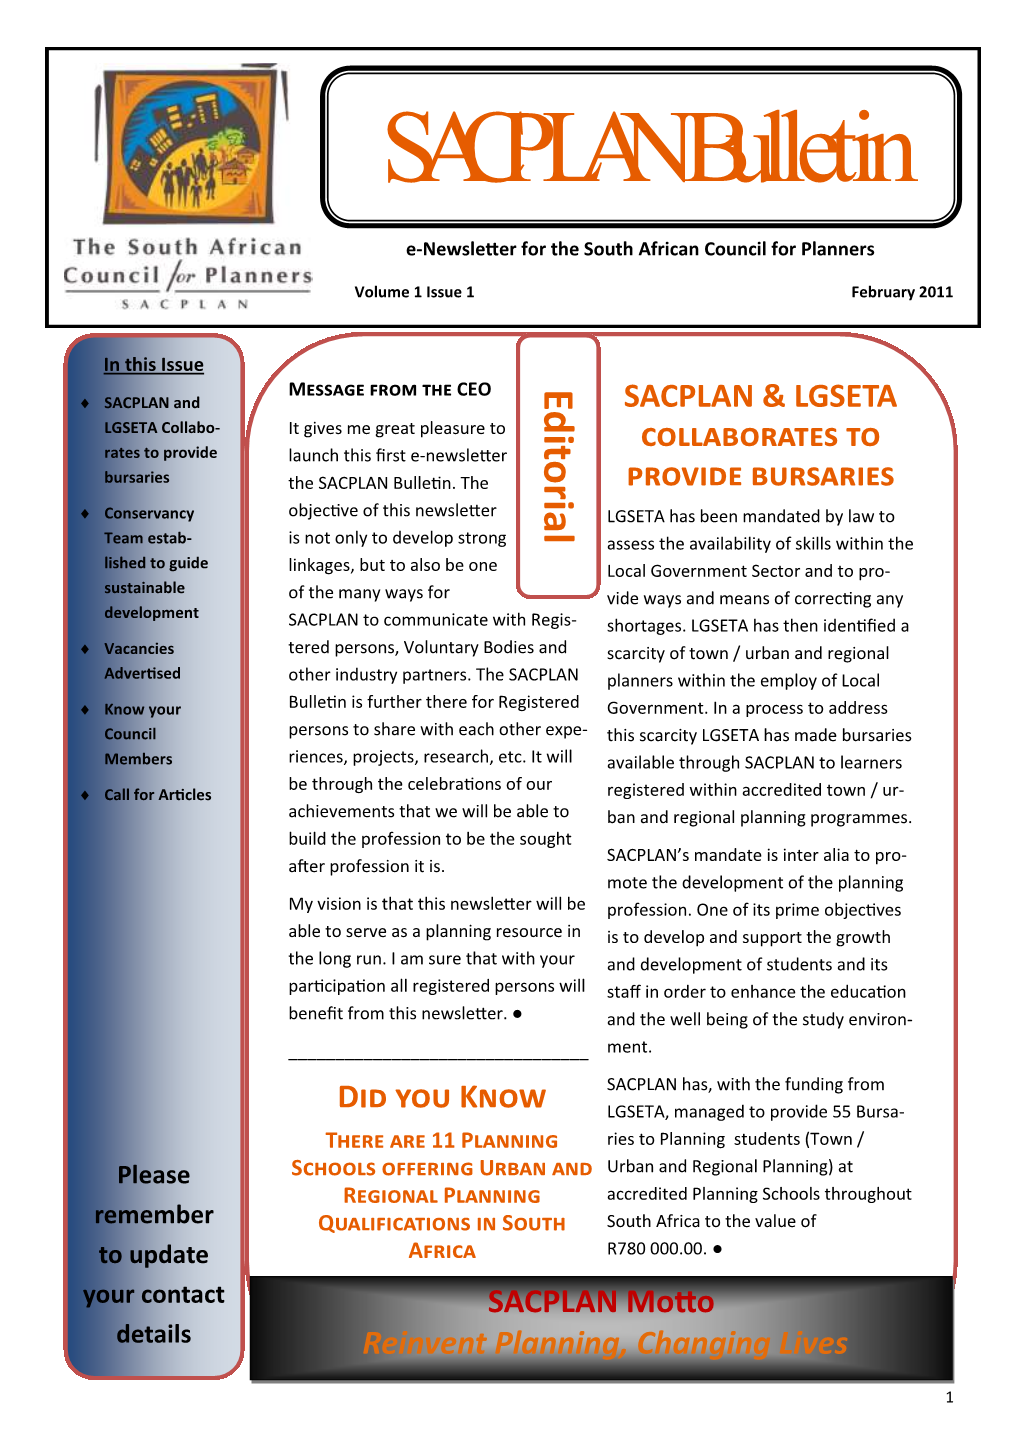 SACPLAN Bulletin Vol 1 Issue 1